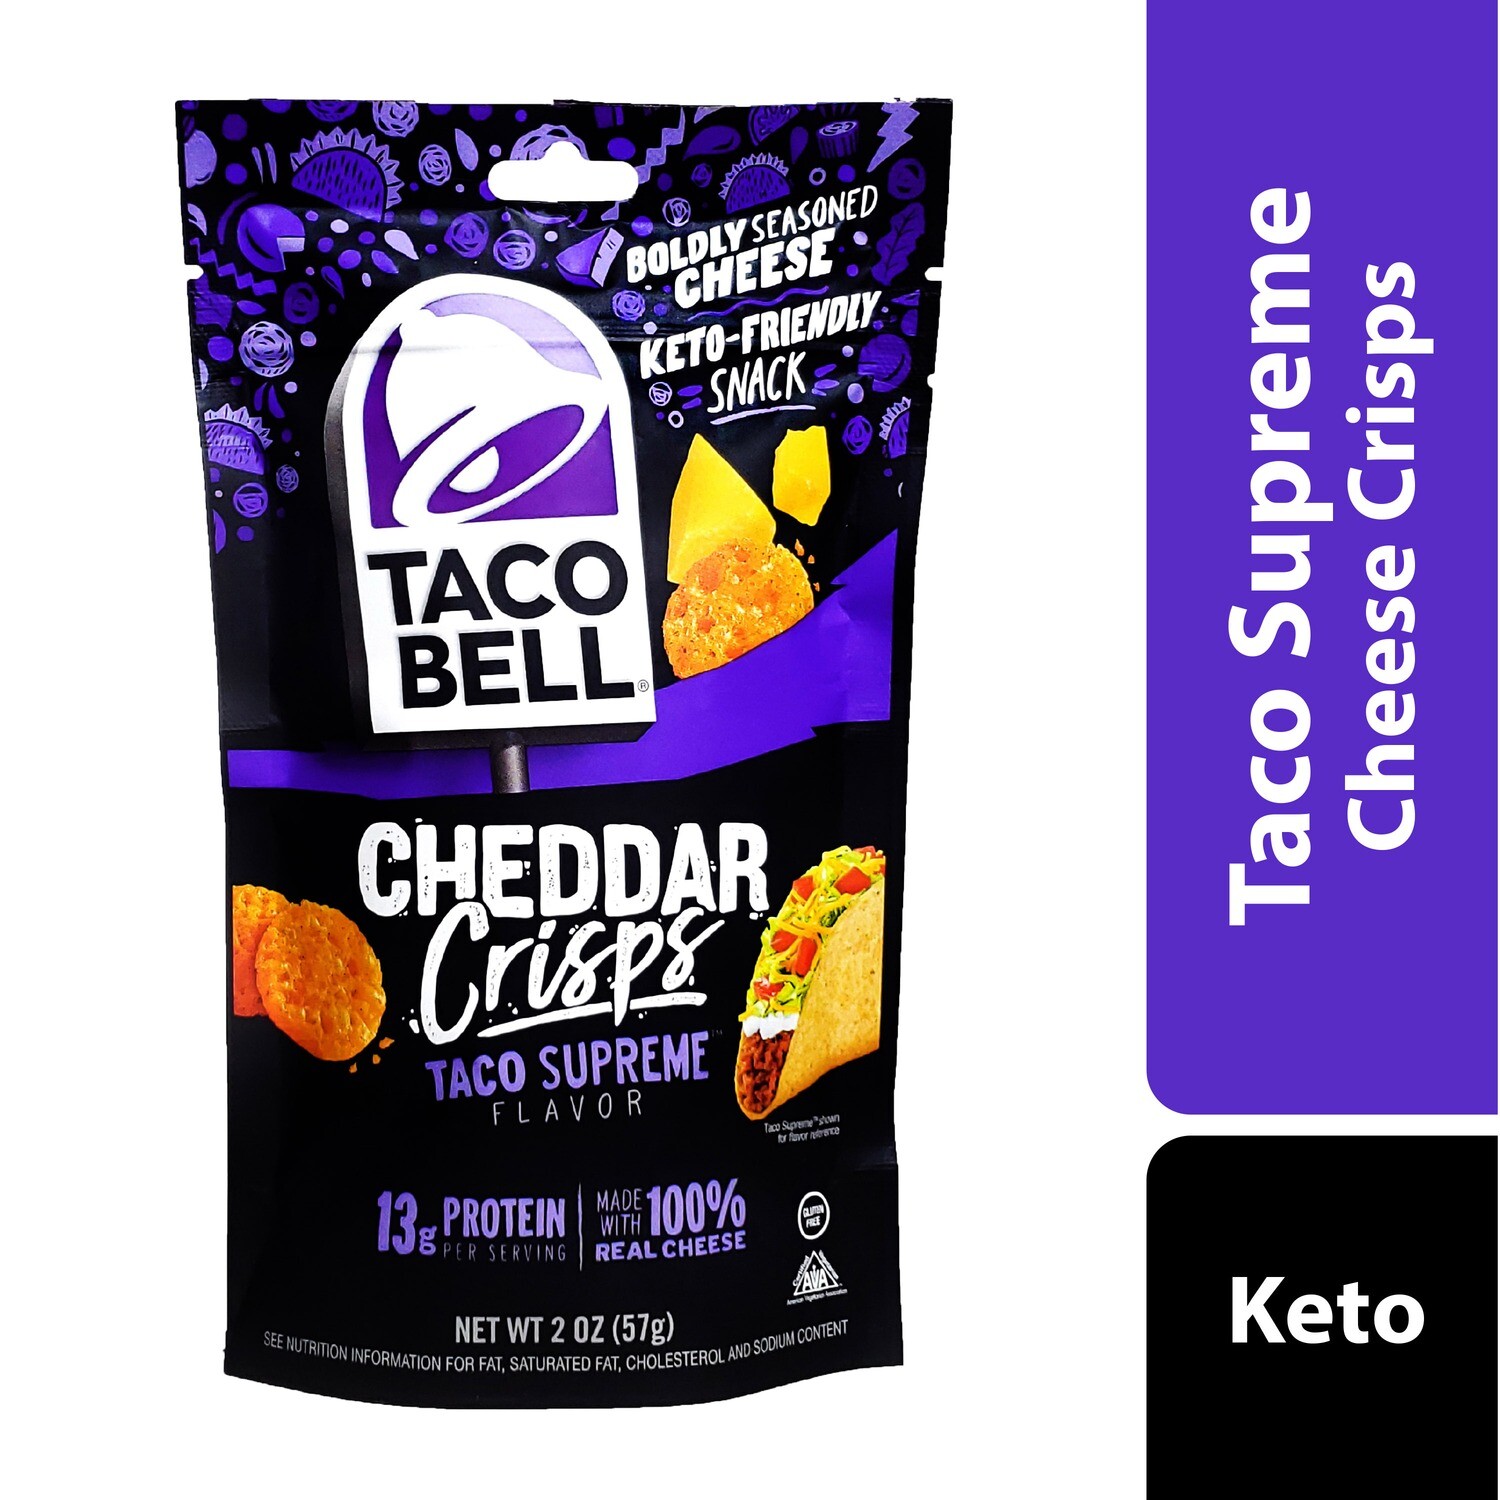 Taco Bell Cheddar Crisps taco Supreme 13g Protein